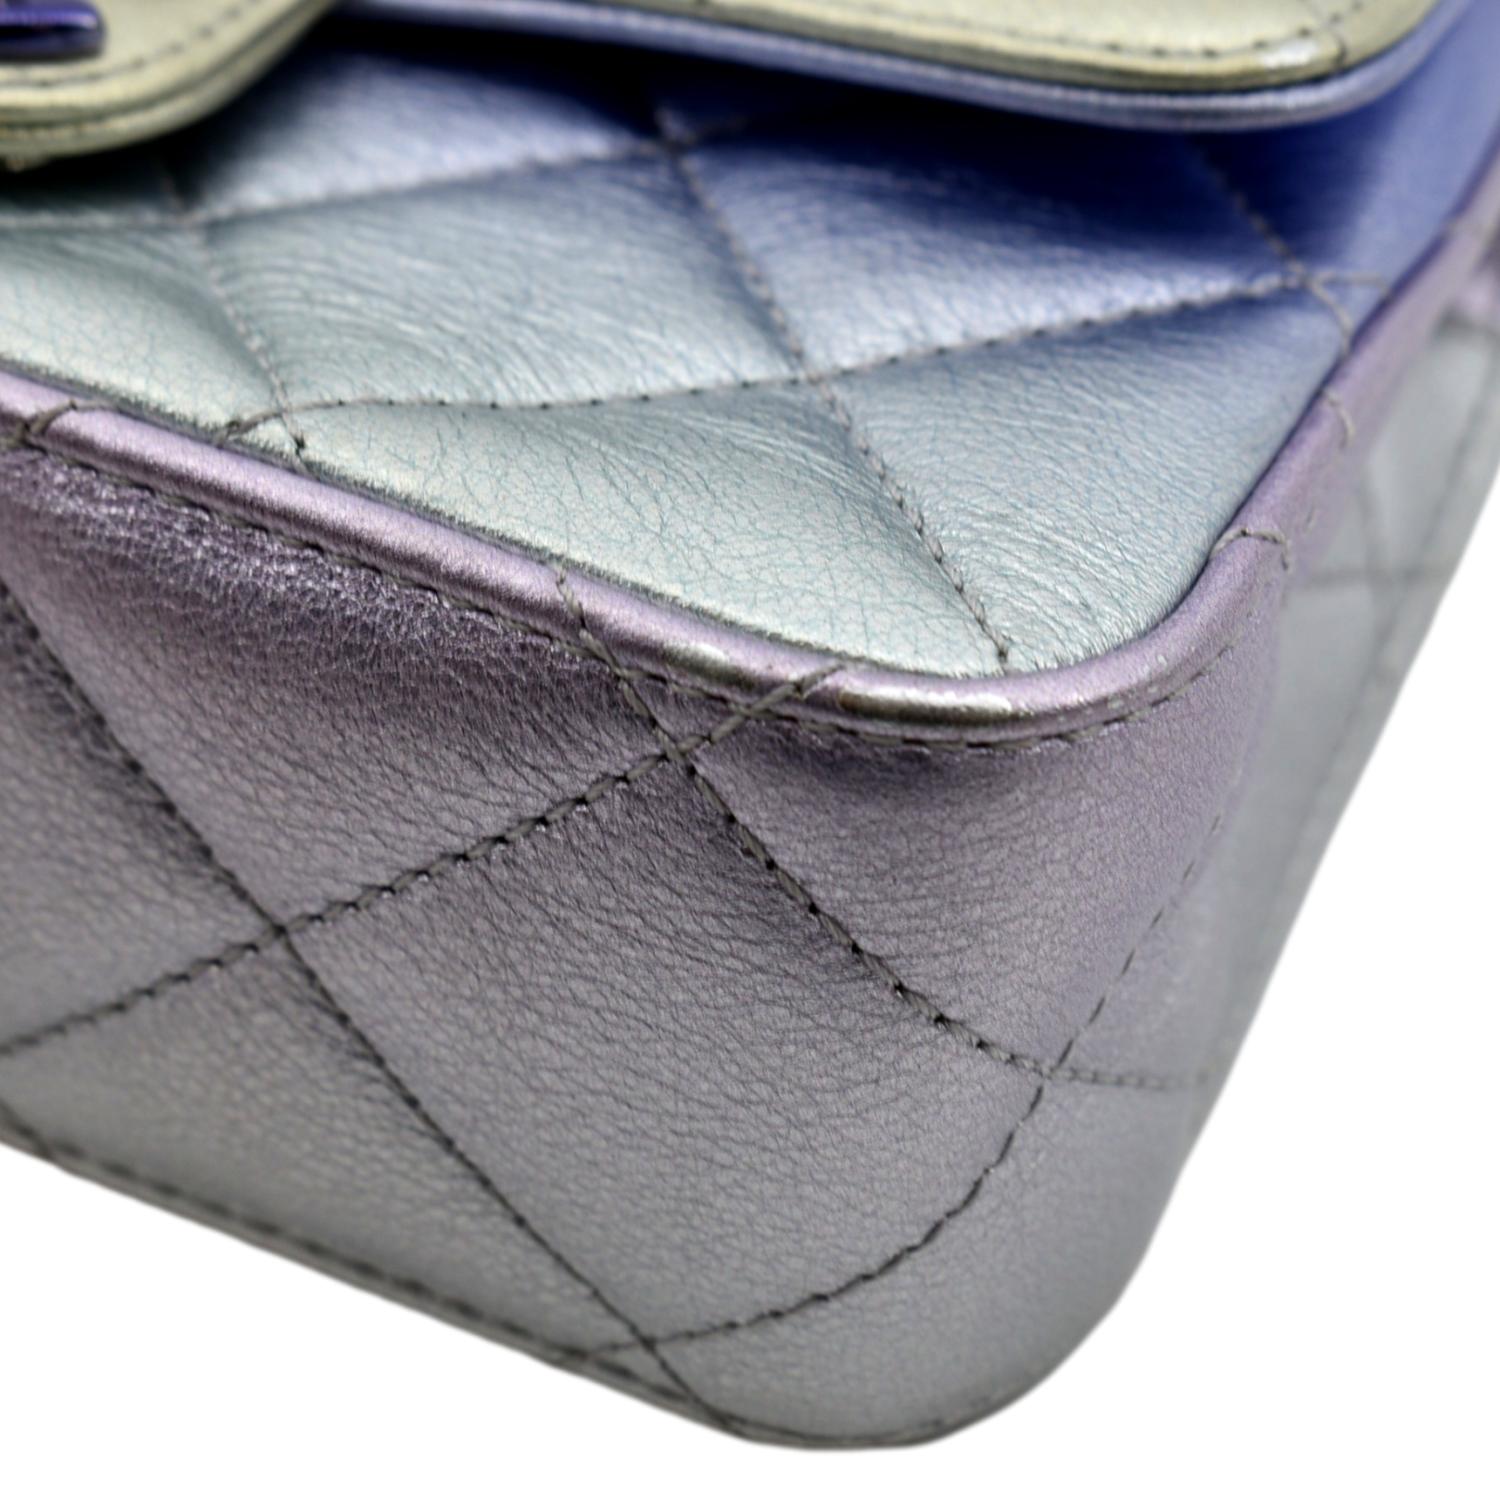 16C Chanel Purple Iridescent Purple Double Carry Classic Flap Bag